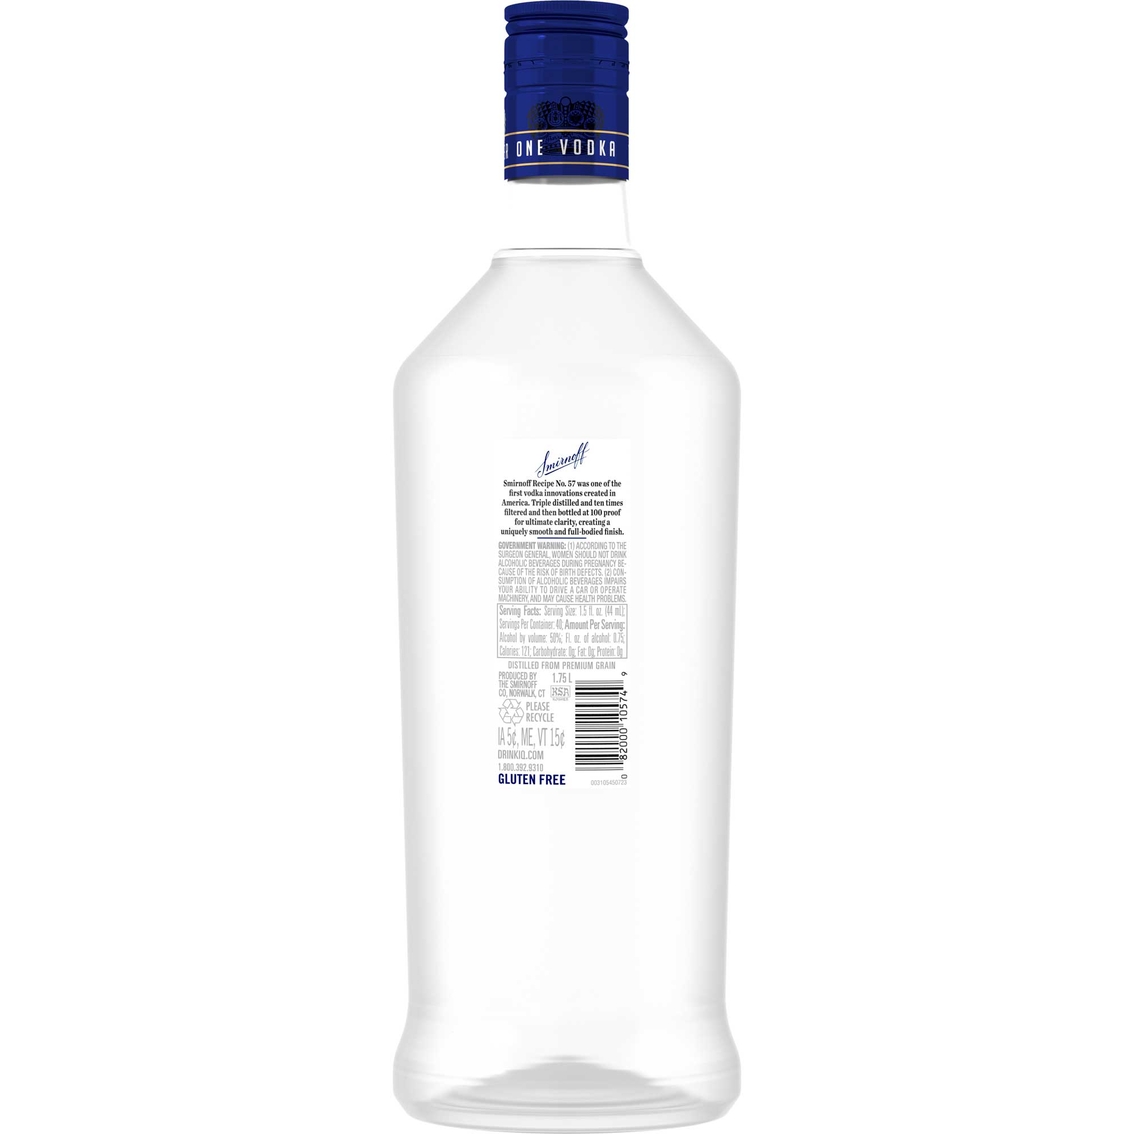 Smirnoff Vodka 100 1.75L - Image 2 of 2